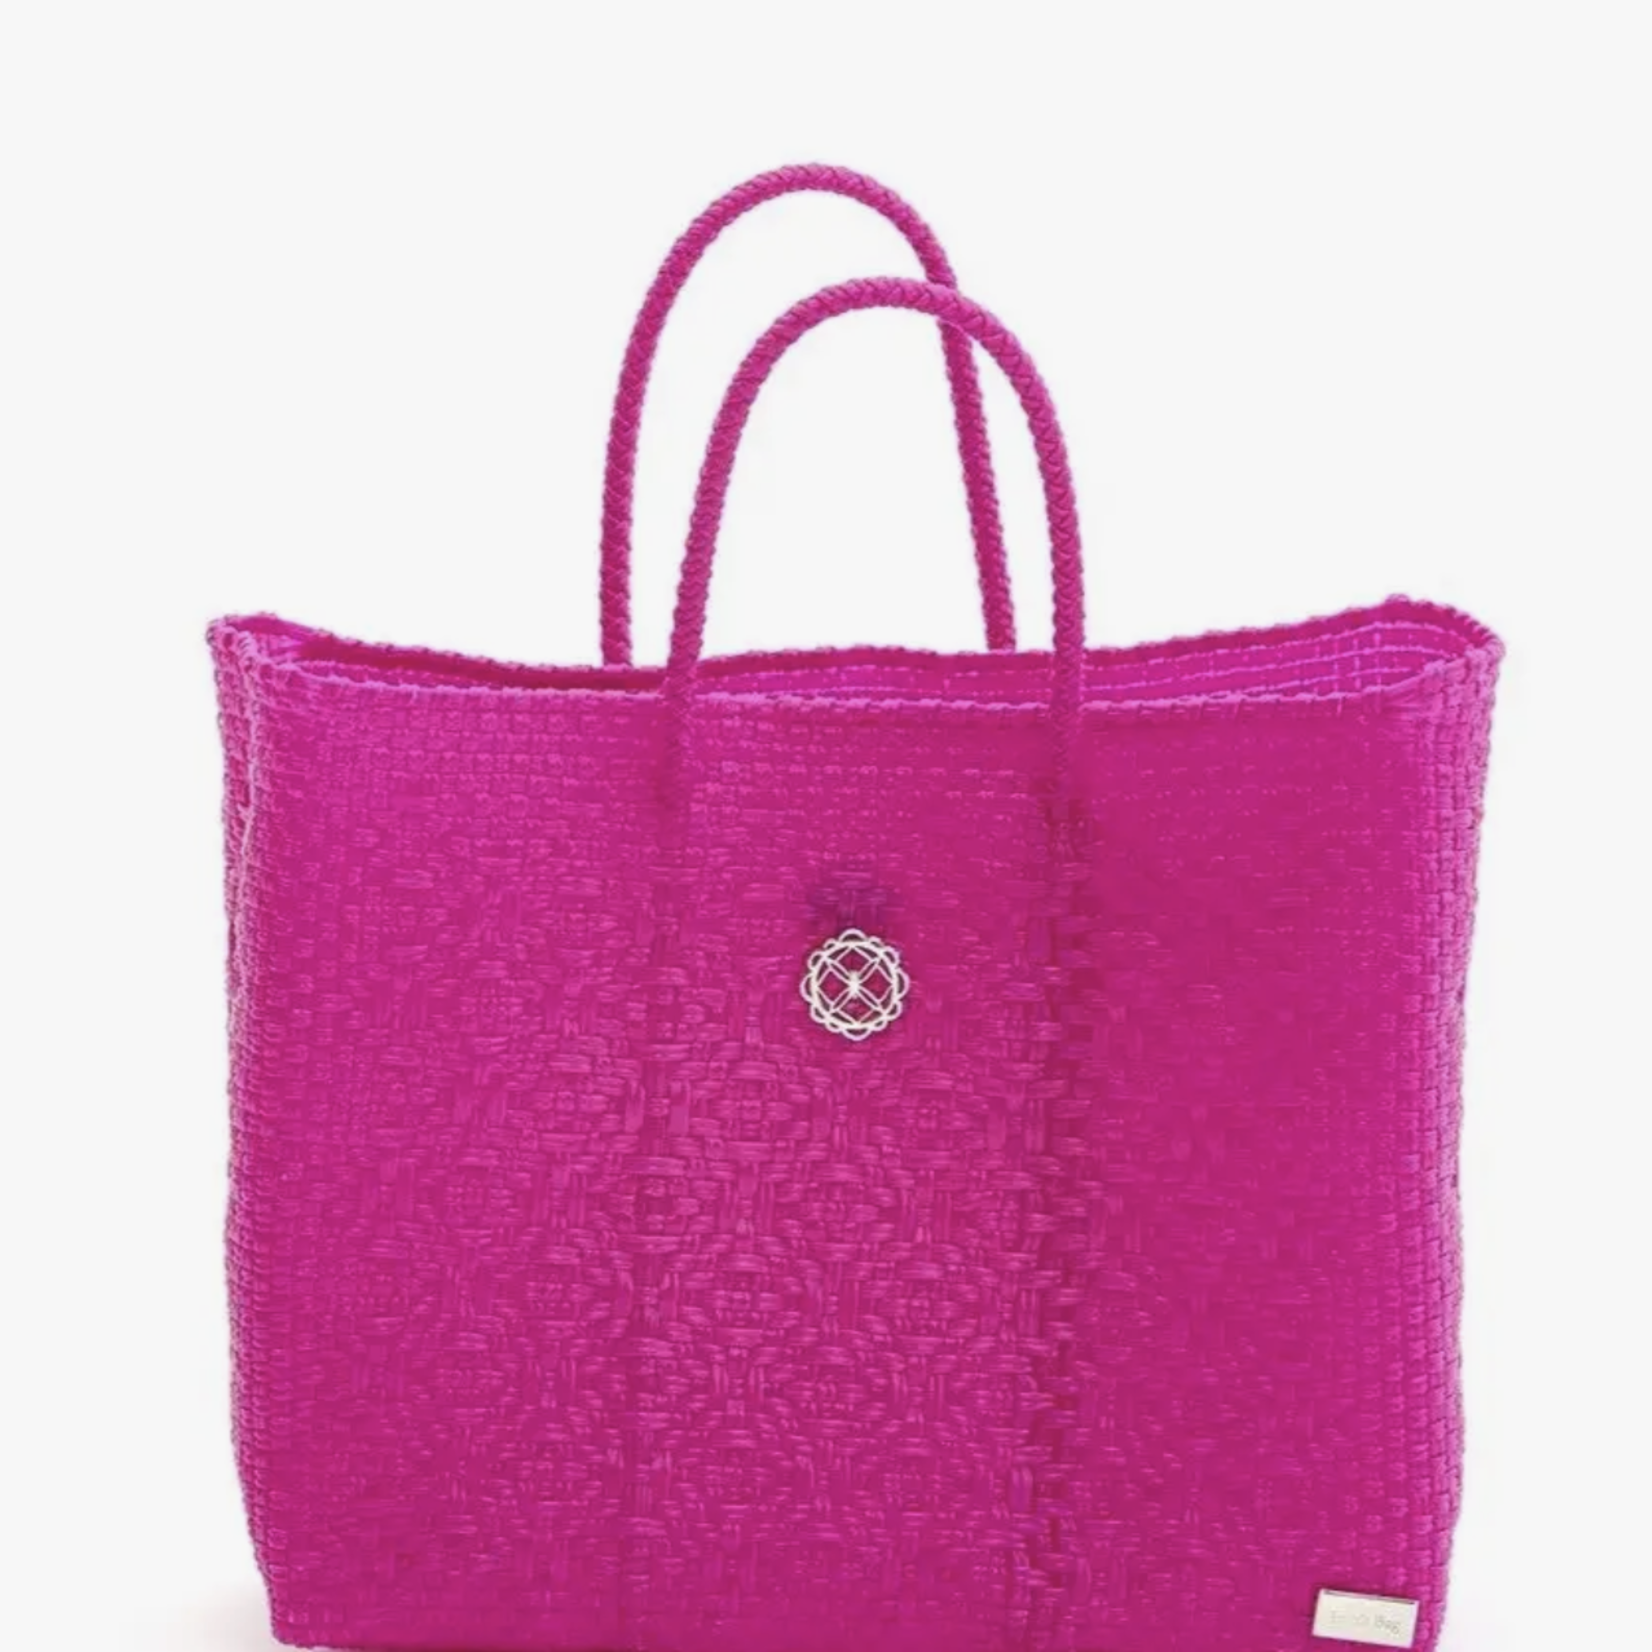 Lola's Bag Small Pink Tote Bag